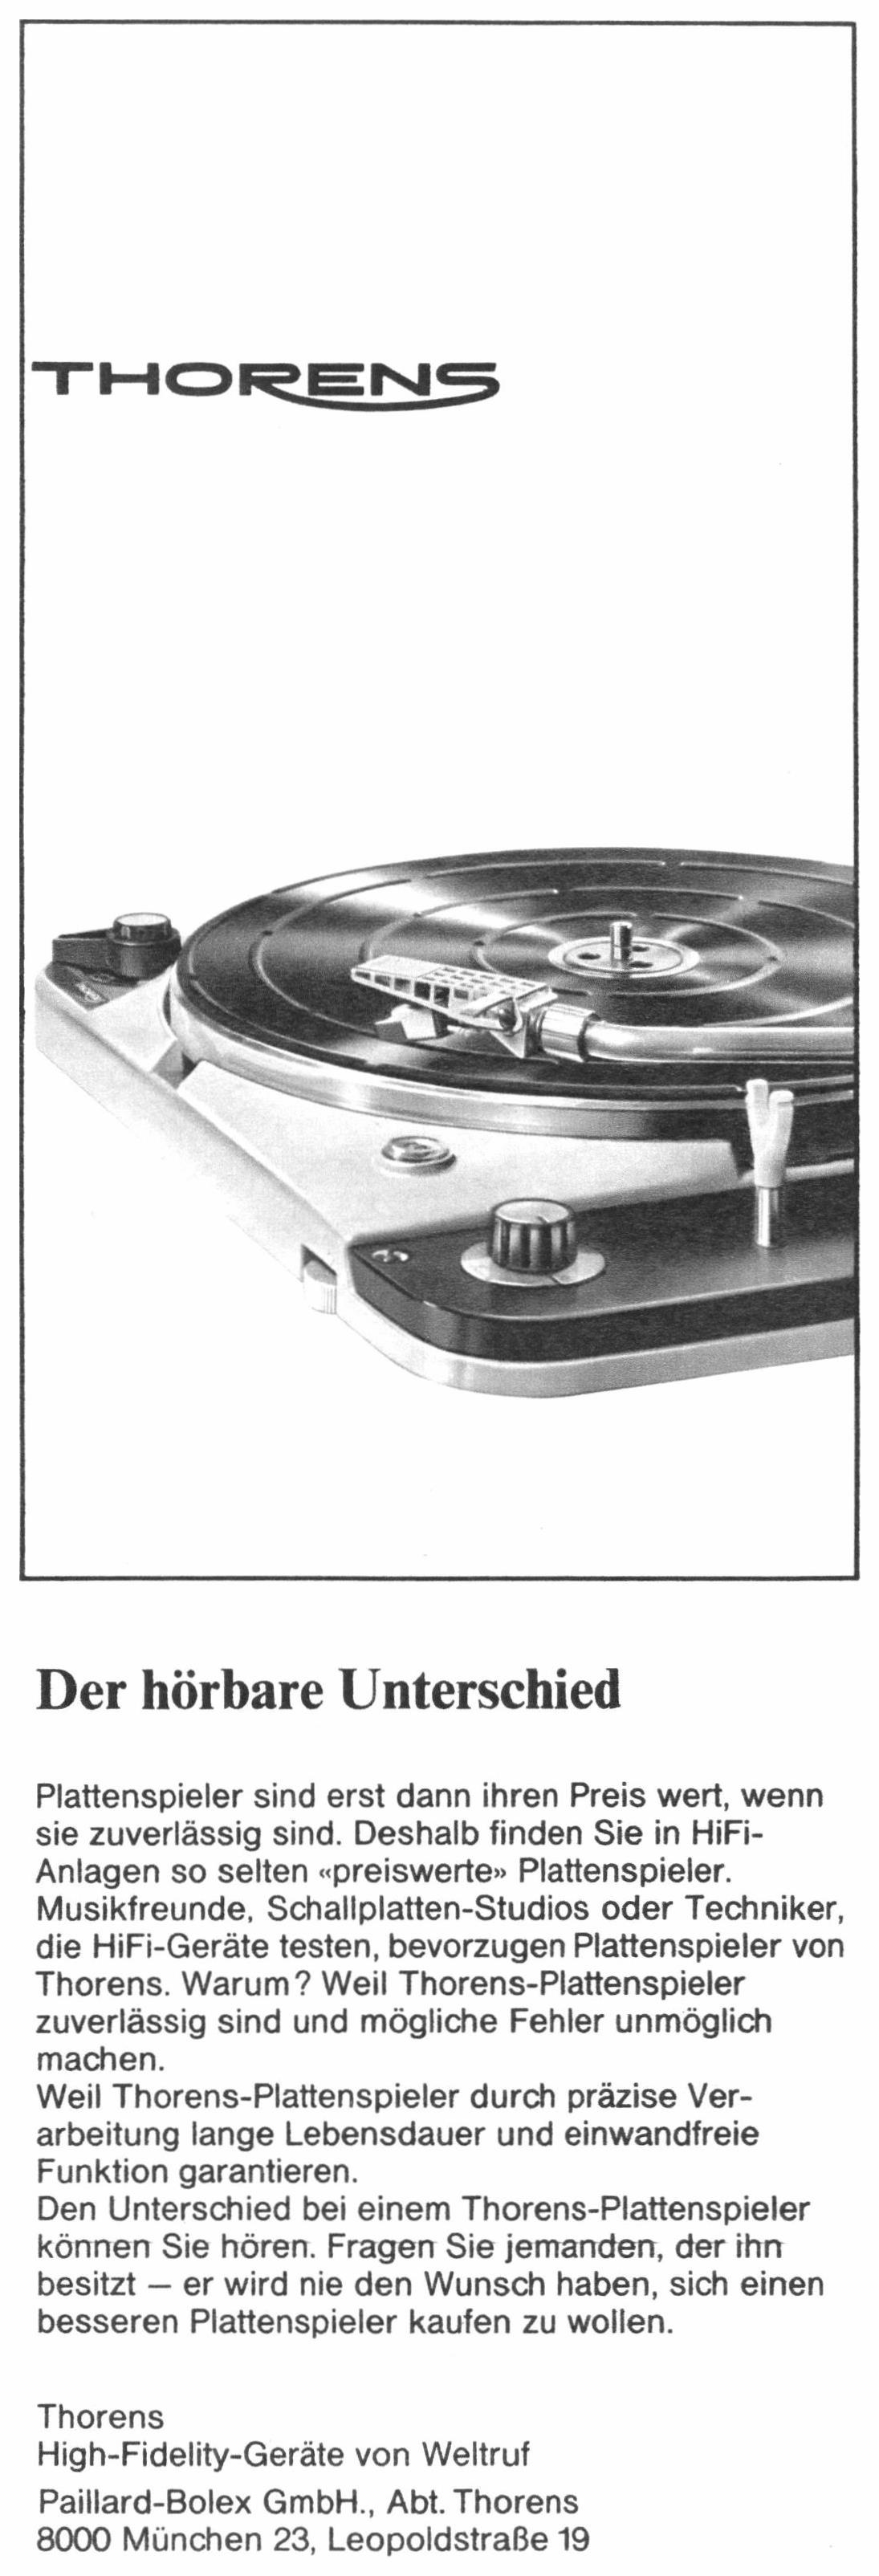 Thorens 1966 0.jpg